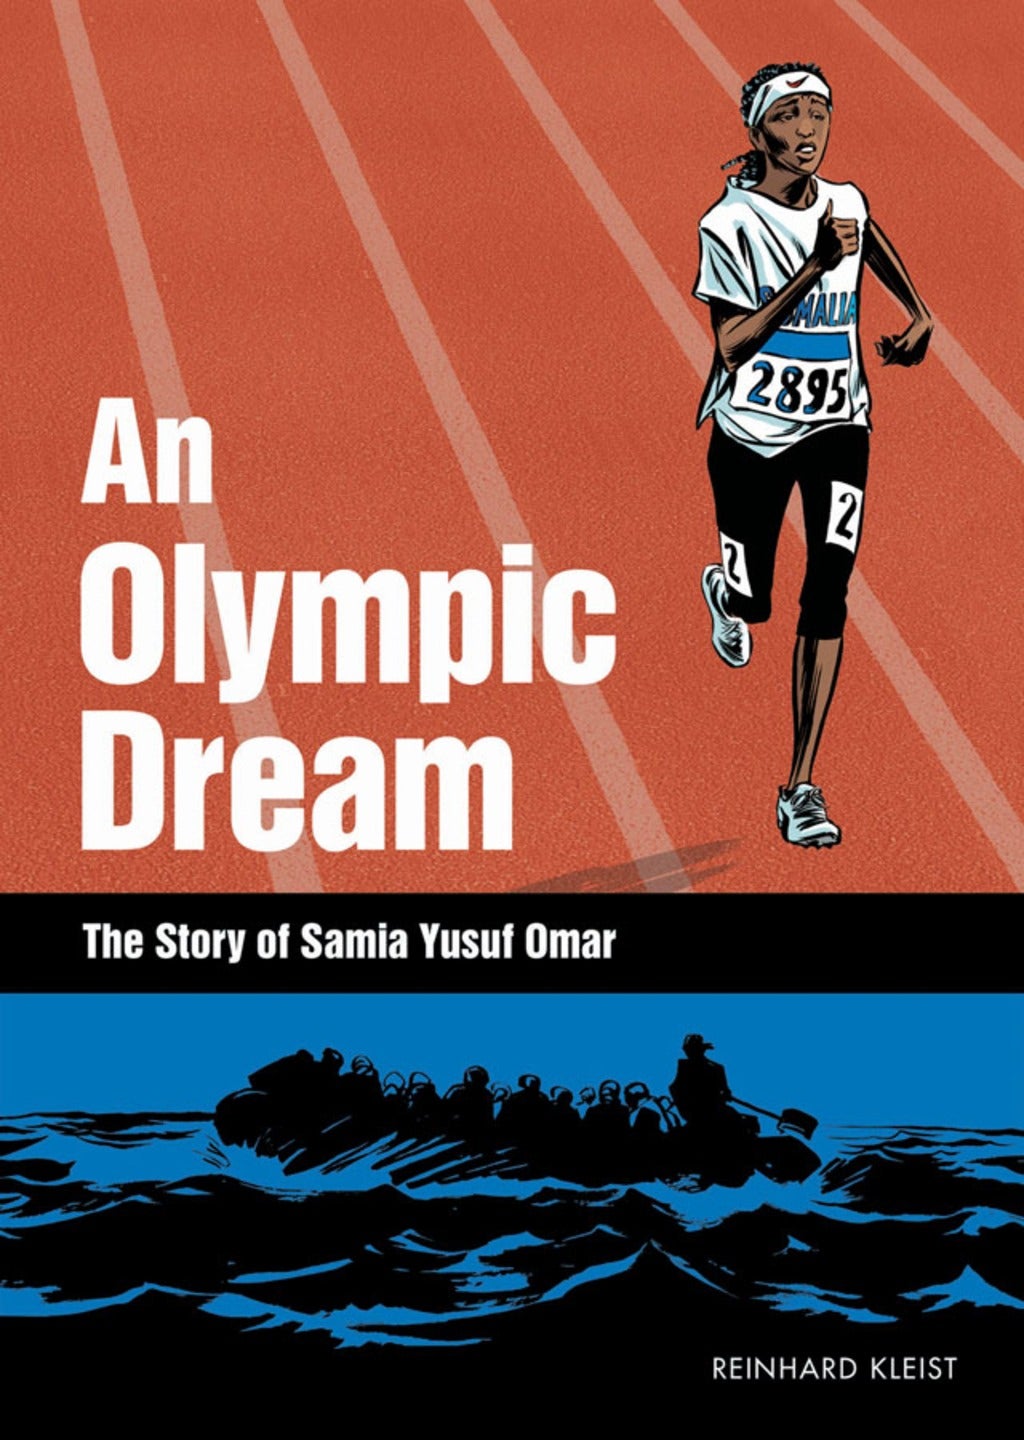 Reinhard Kleist's An Olympic Dream